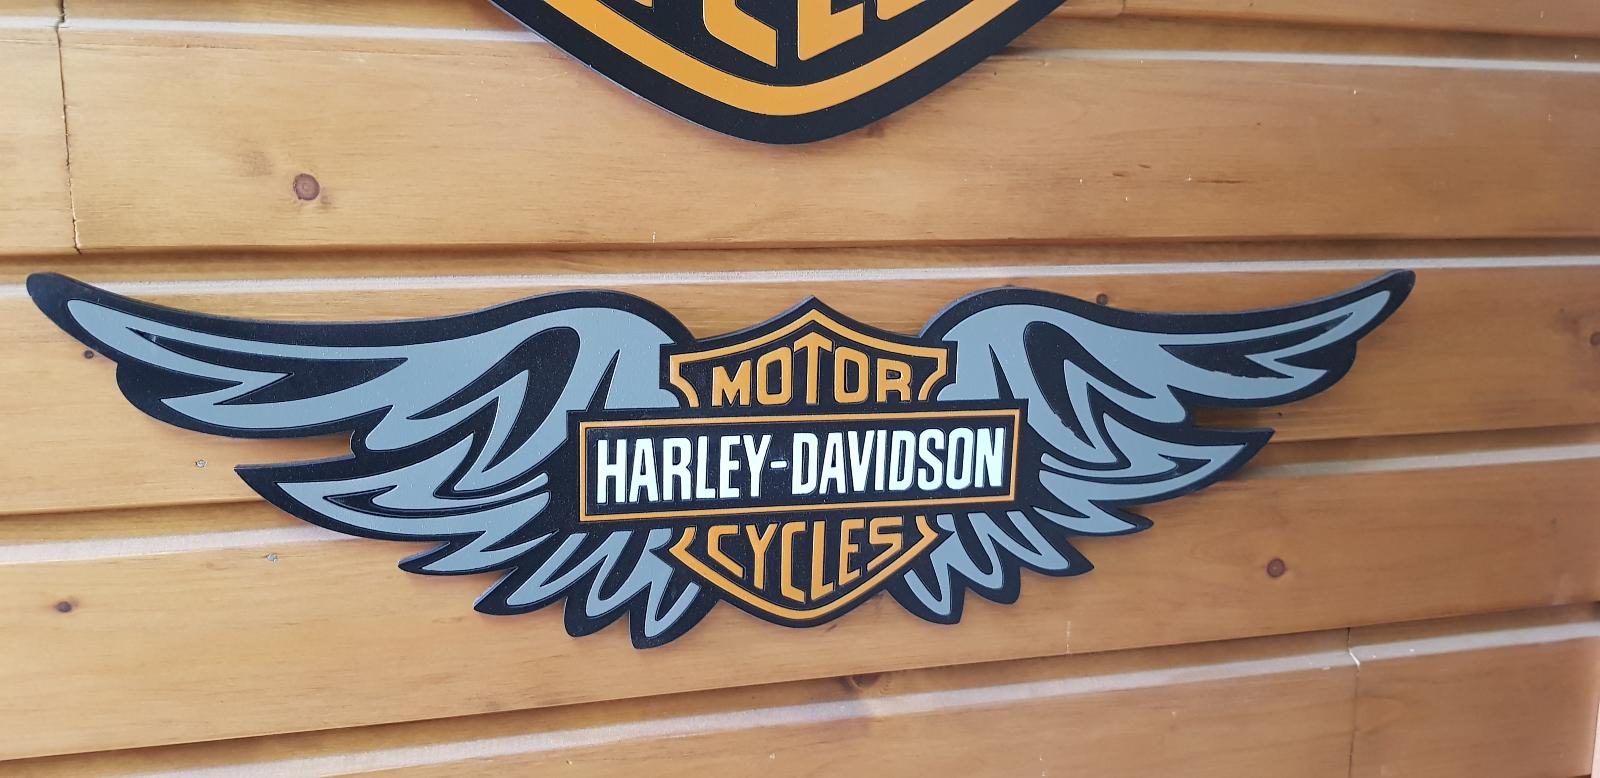 Harley Davidson ceduľka 2 - Auto-moto